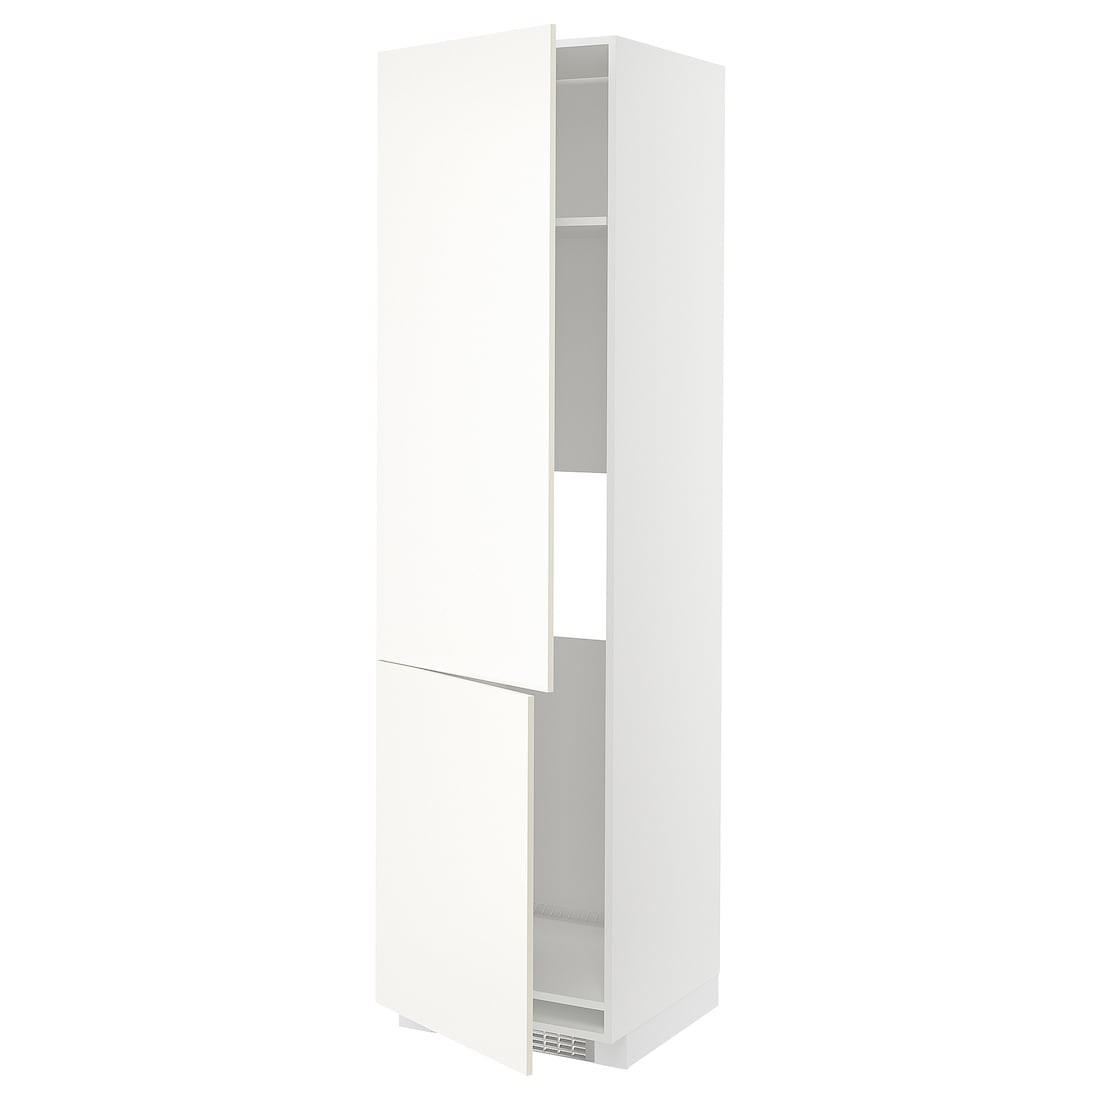 IKEA METOD МЕТОД Высокий шкаф для холодильника / морозильника / 2дверцы, белый / Vallstena белый 59507356 595.073.56